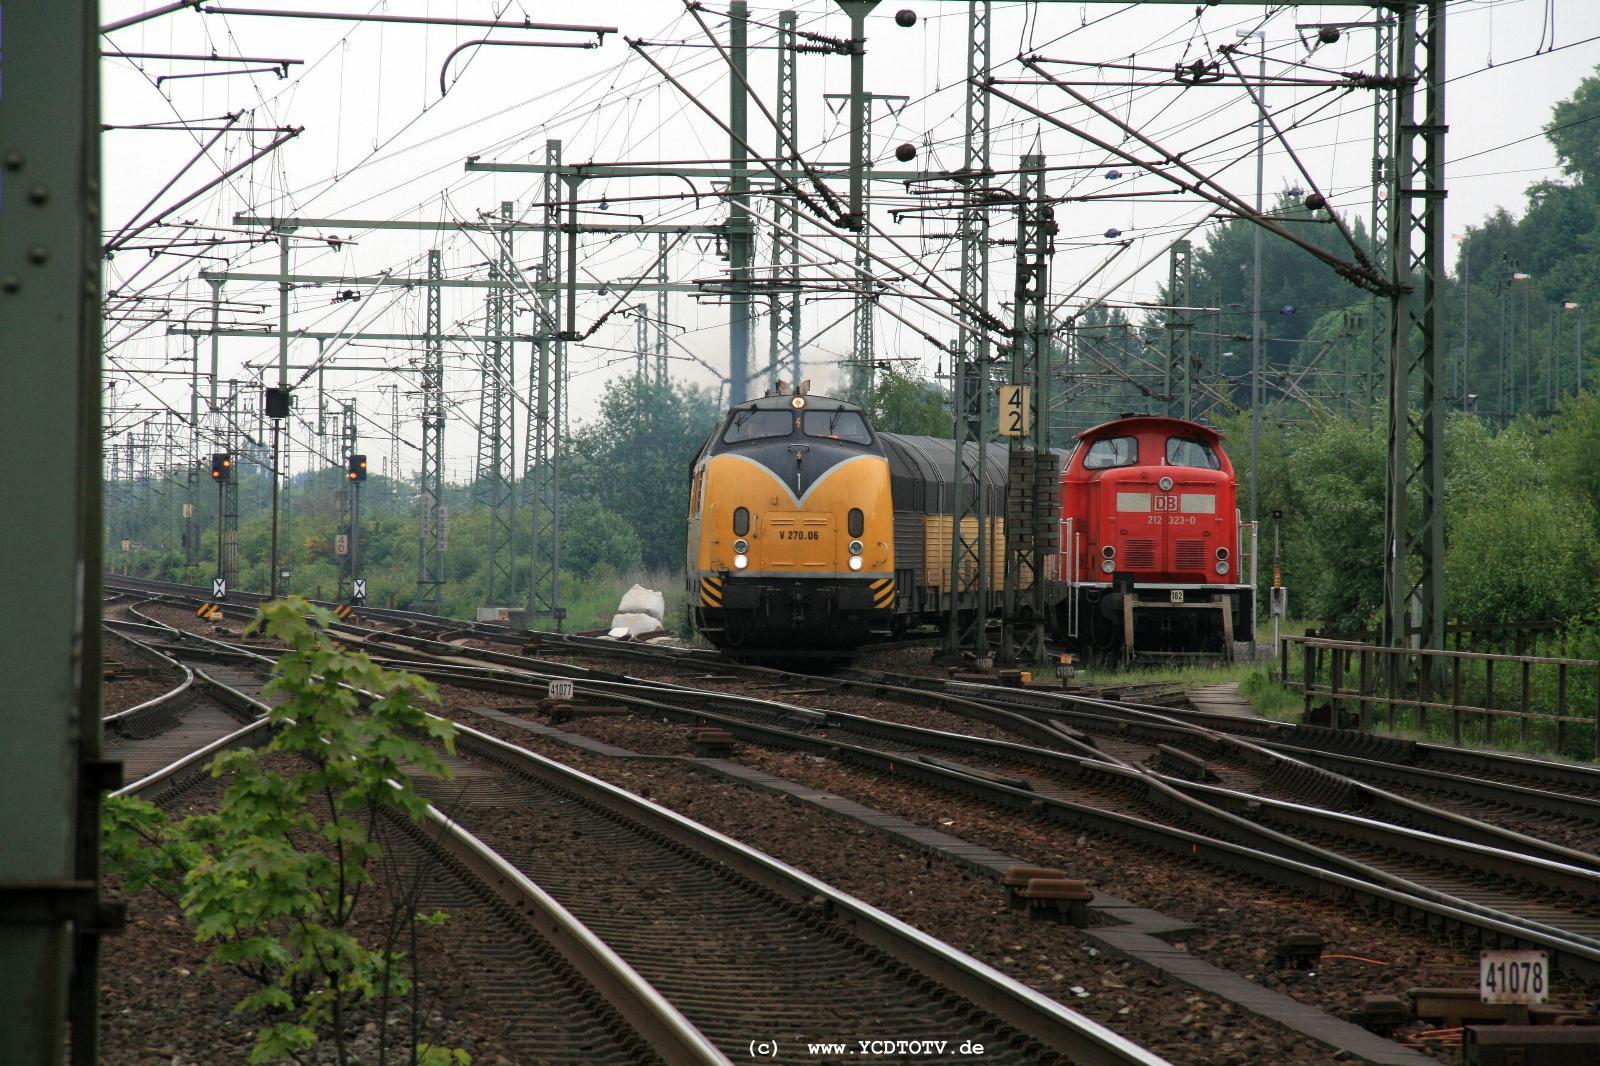  Bahnhof Hamburg-Harburg, 18.05.2011, 15:00 V 270.06 Richtung Norden 